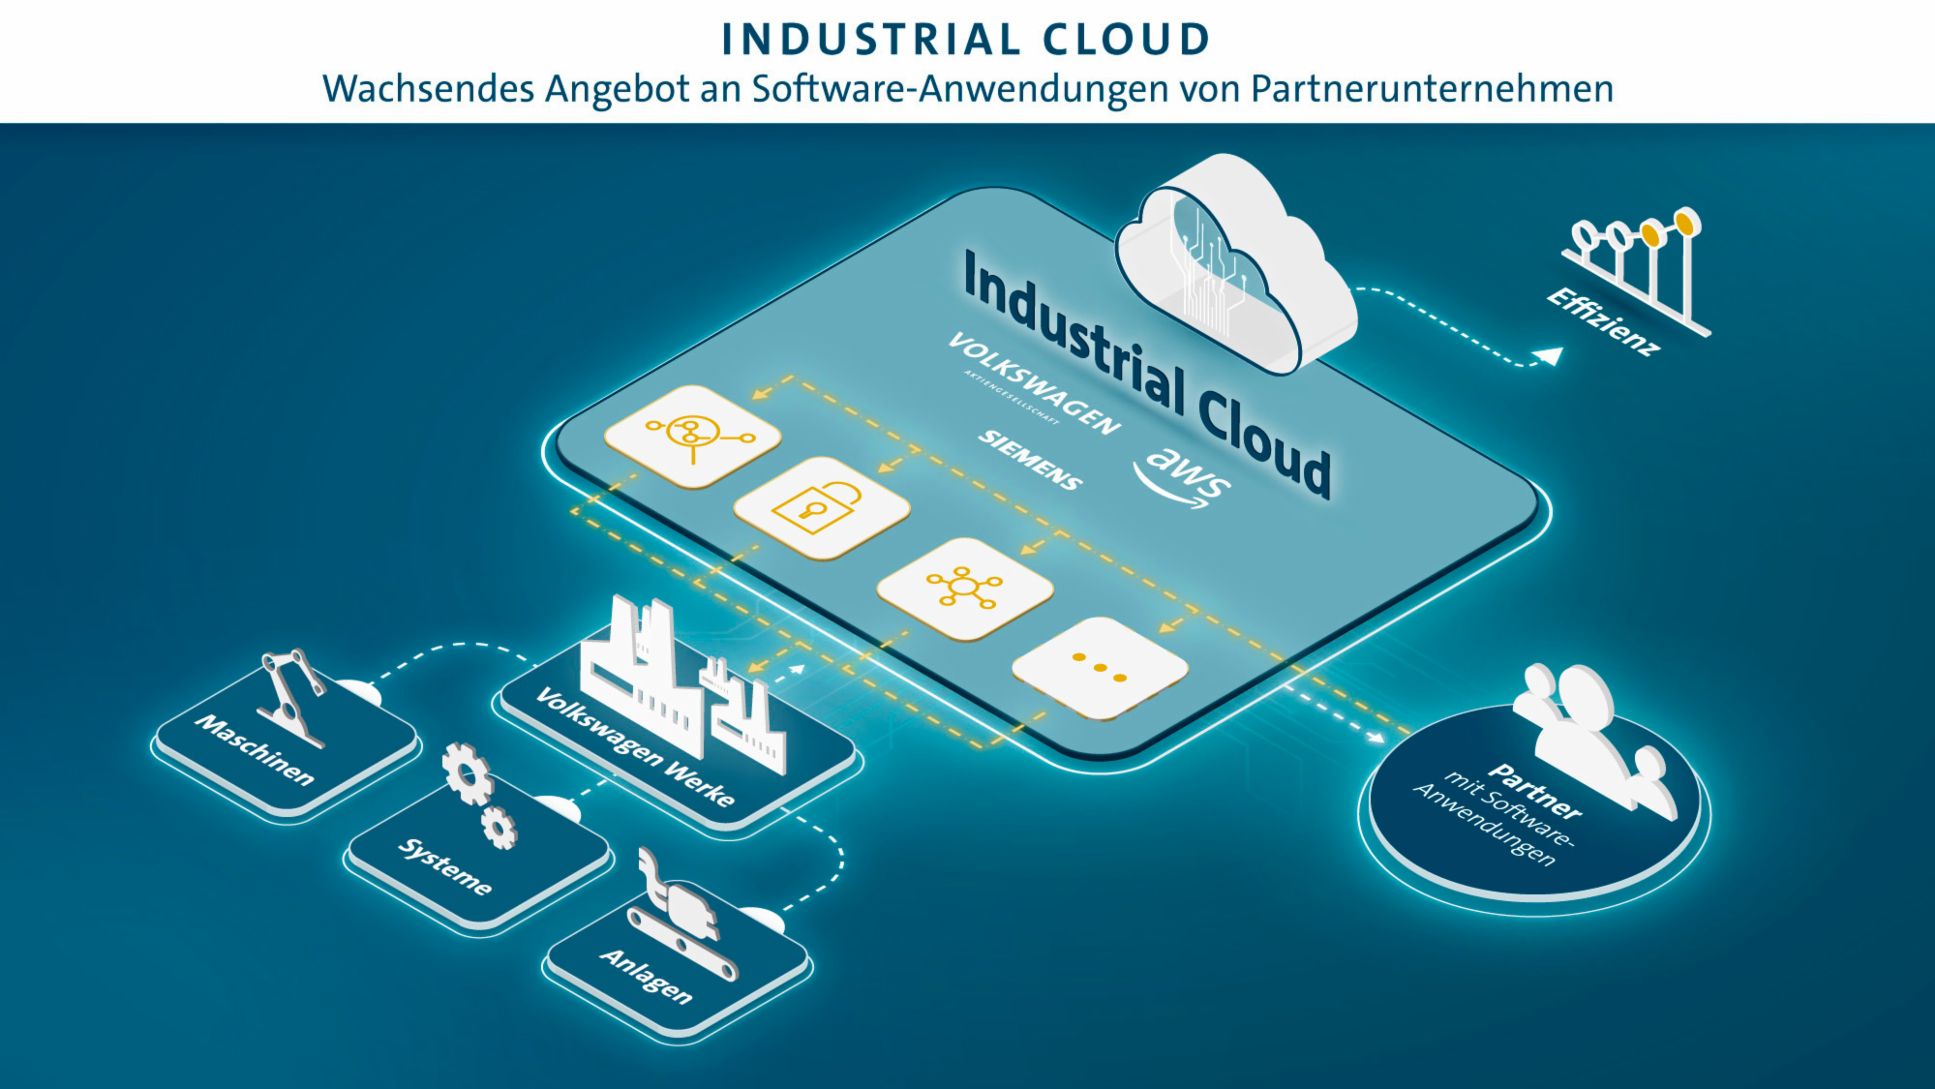 Industrial Cloud, 2021, Porsche Consulting